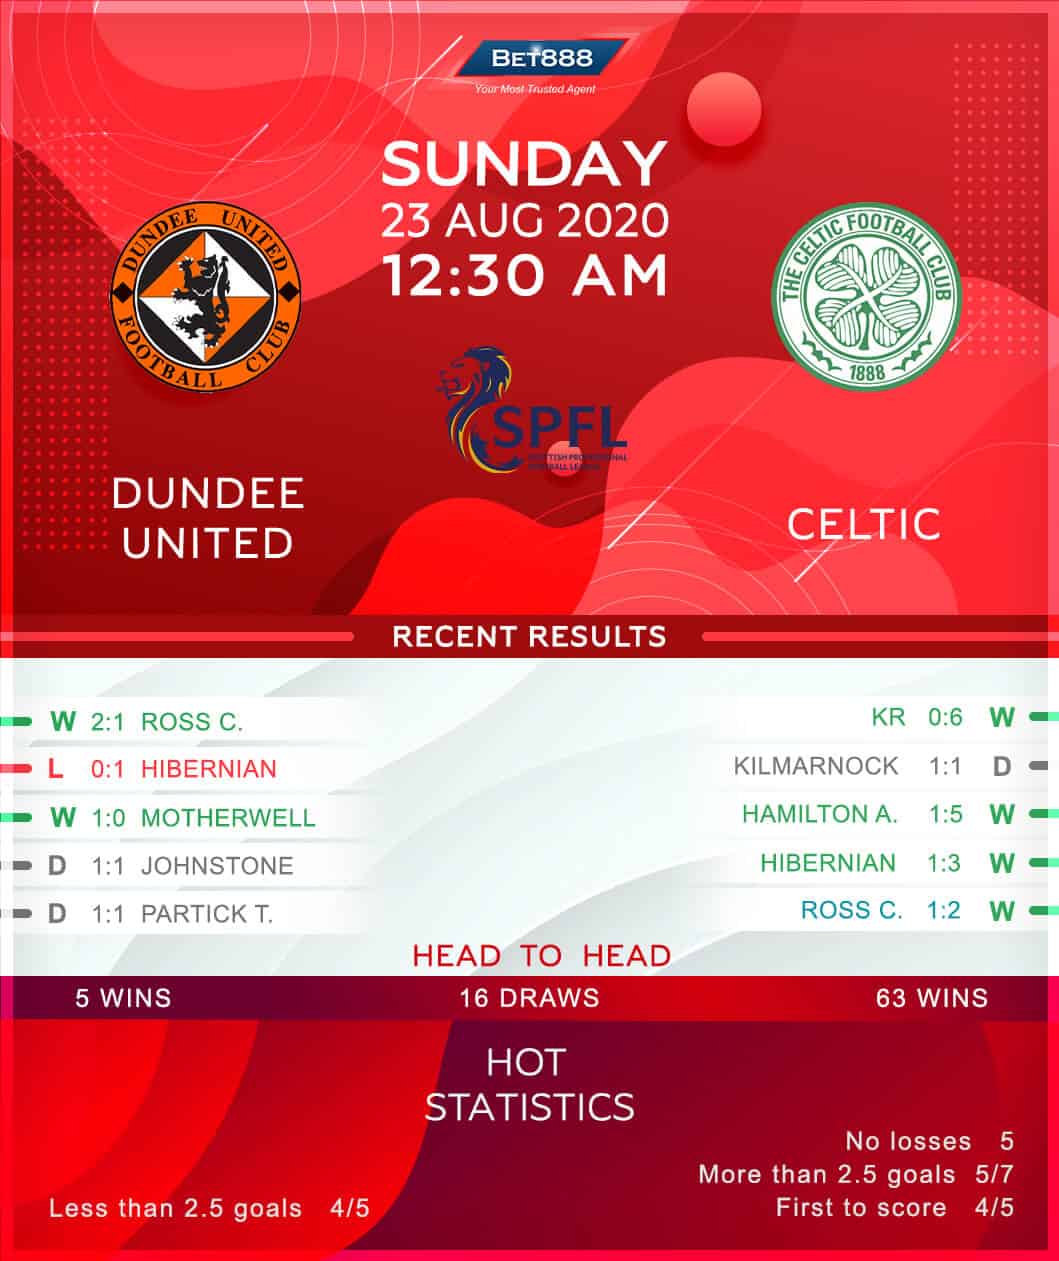 Dundee United vs Celtic 23/08/20